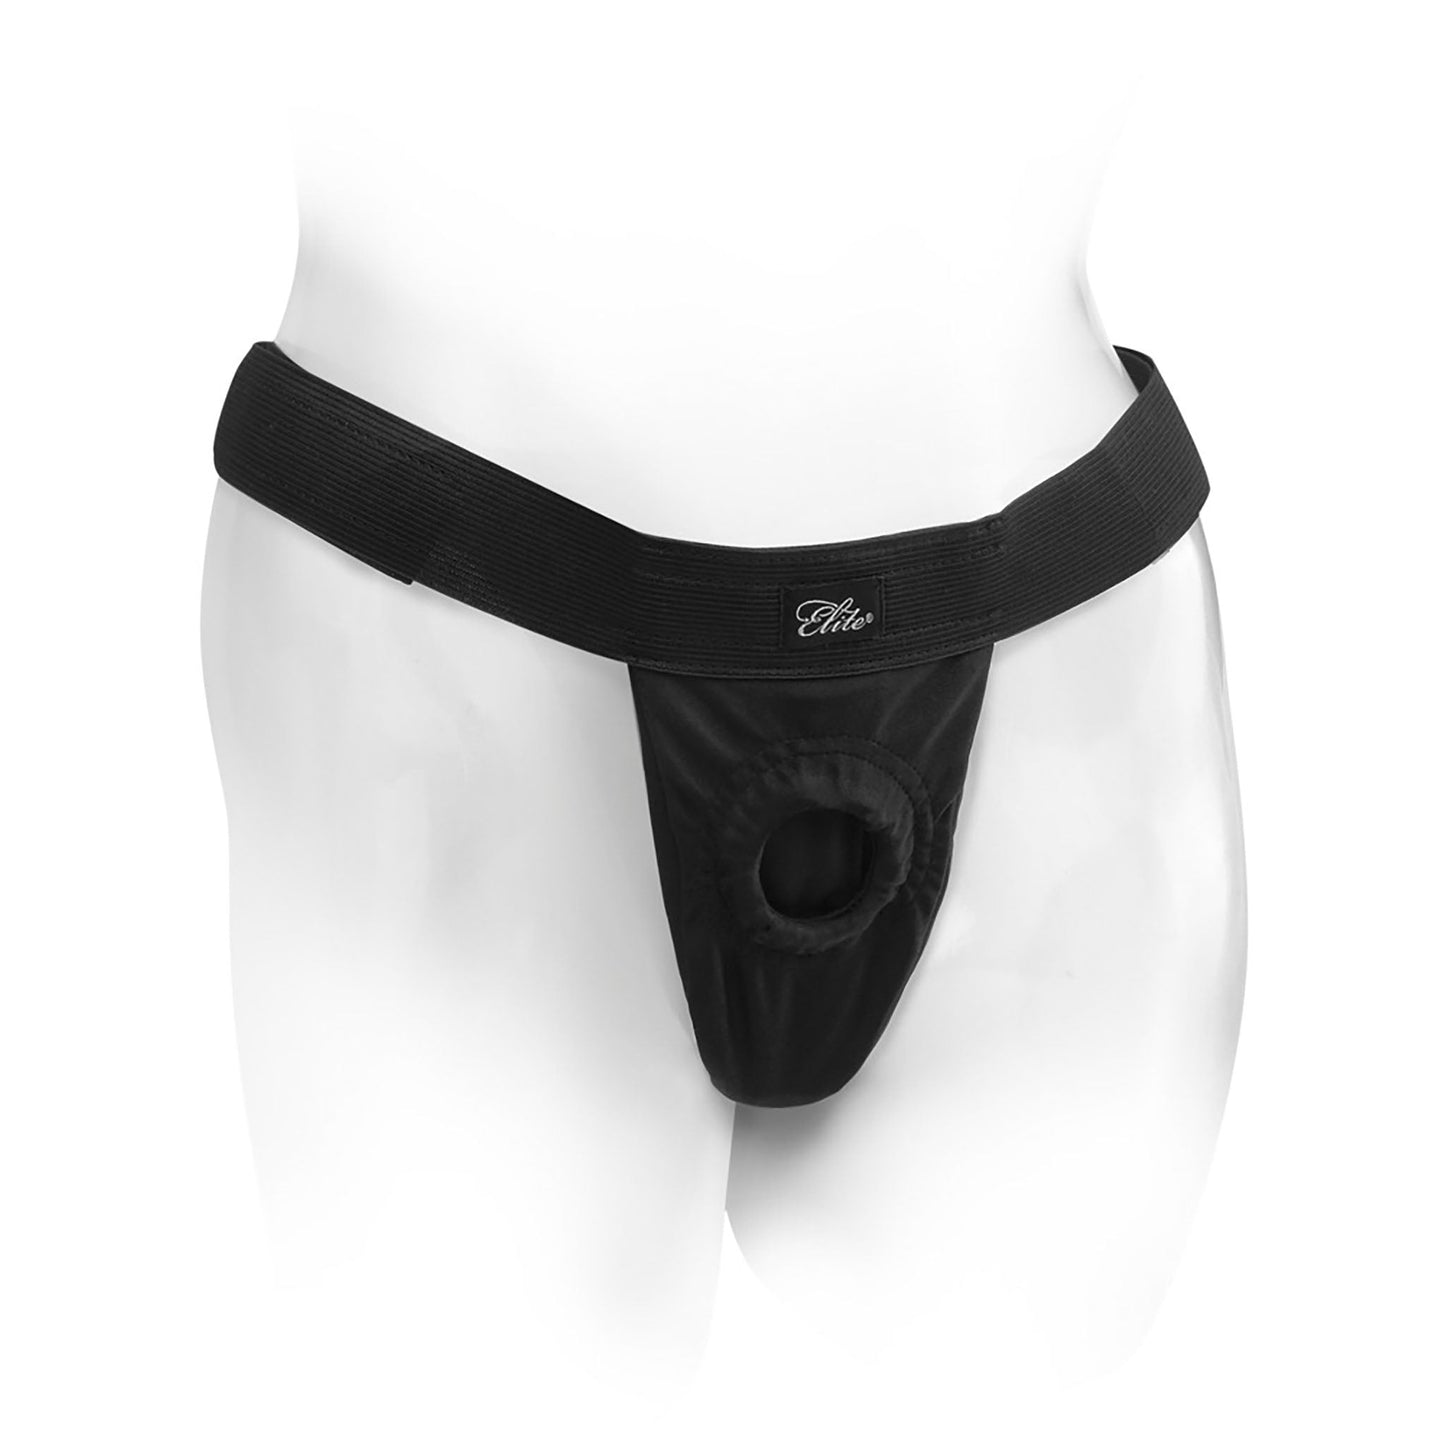 Universal Breathable Harness, atmusaktives Harness in schwarz, getragen, profil